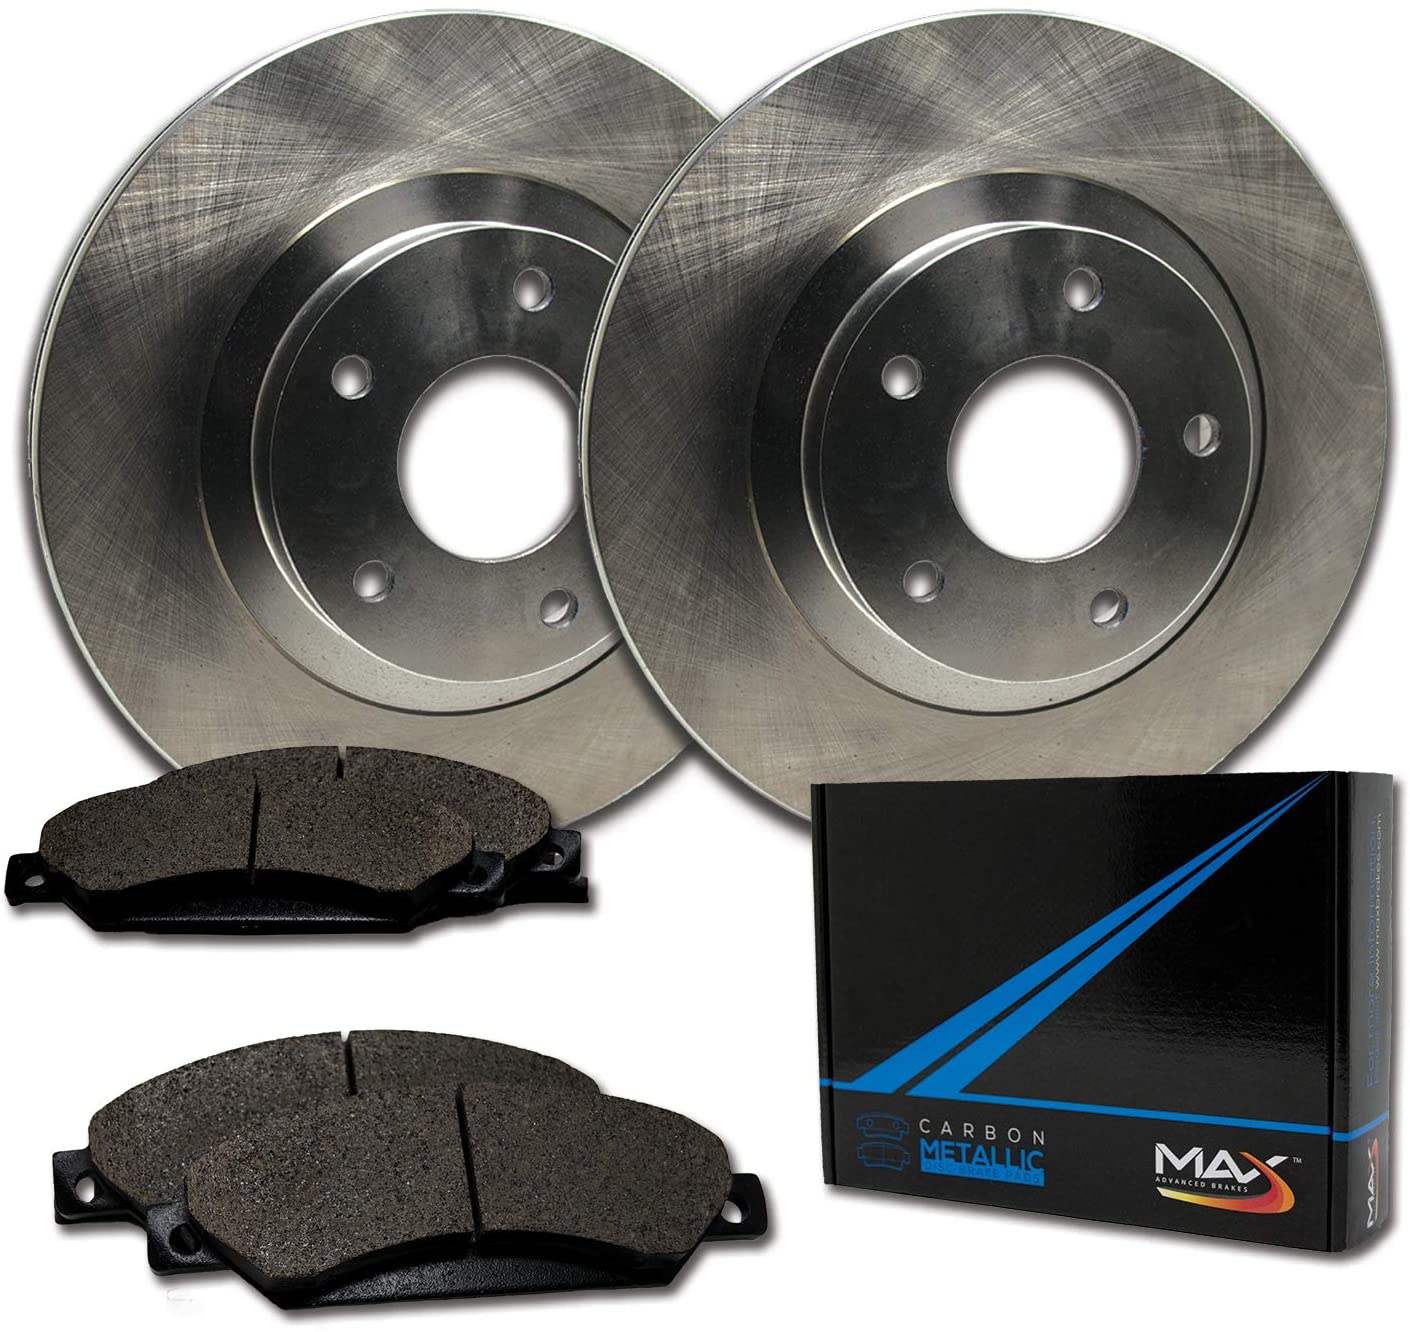 [Front] Max Brakes Premium OE Rotors with Carbon Metallic Pads TA044541 (OE; Metallic Pads)